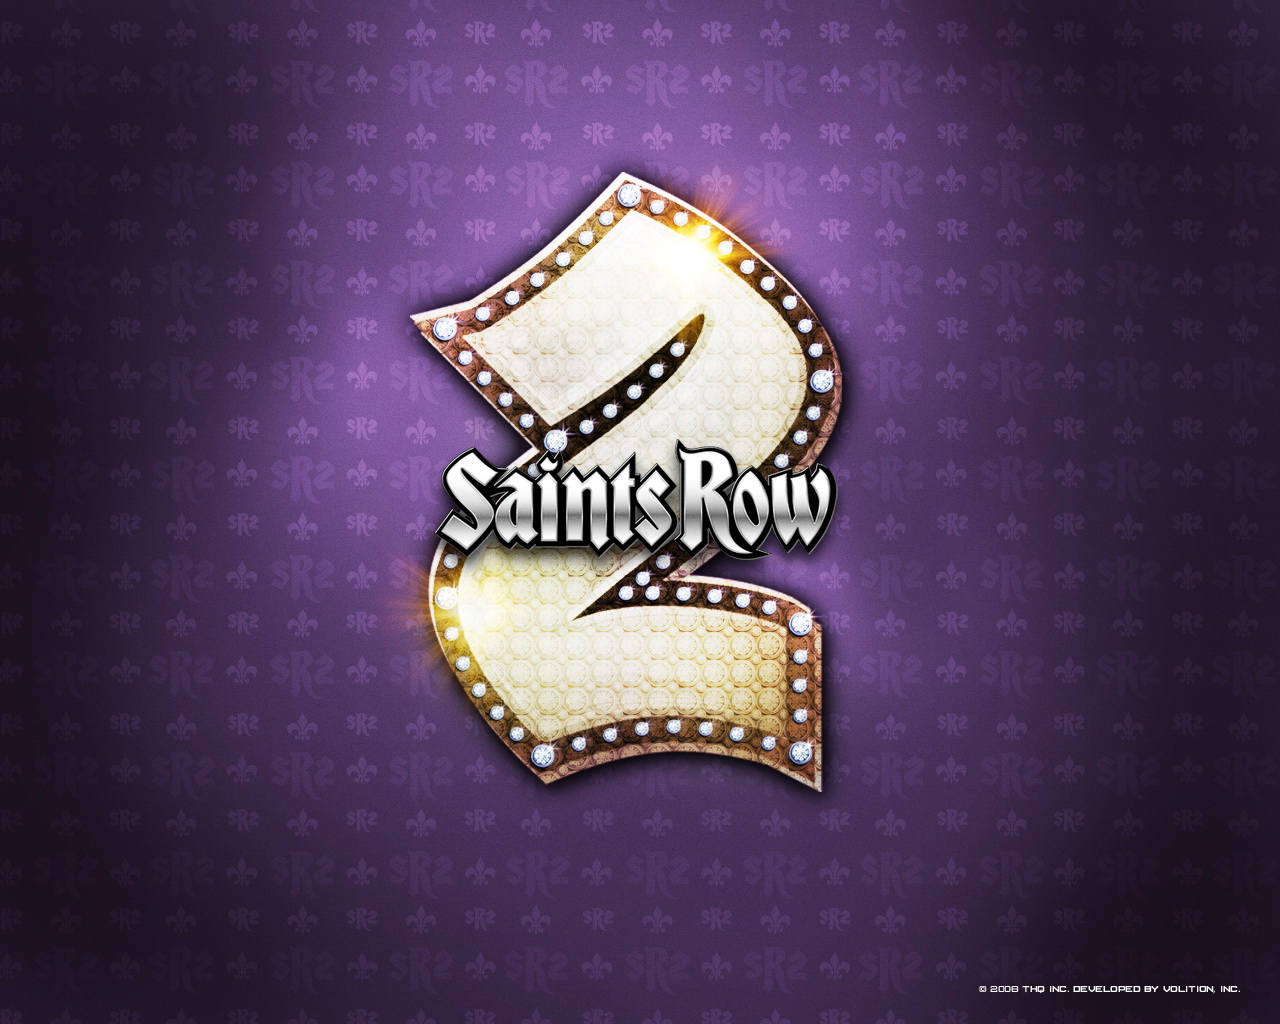 Latest Screens : Saints Row 2 Wallpapers